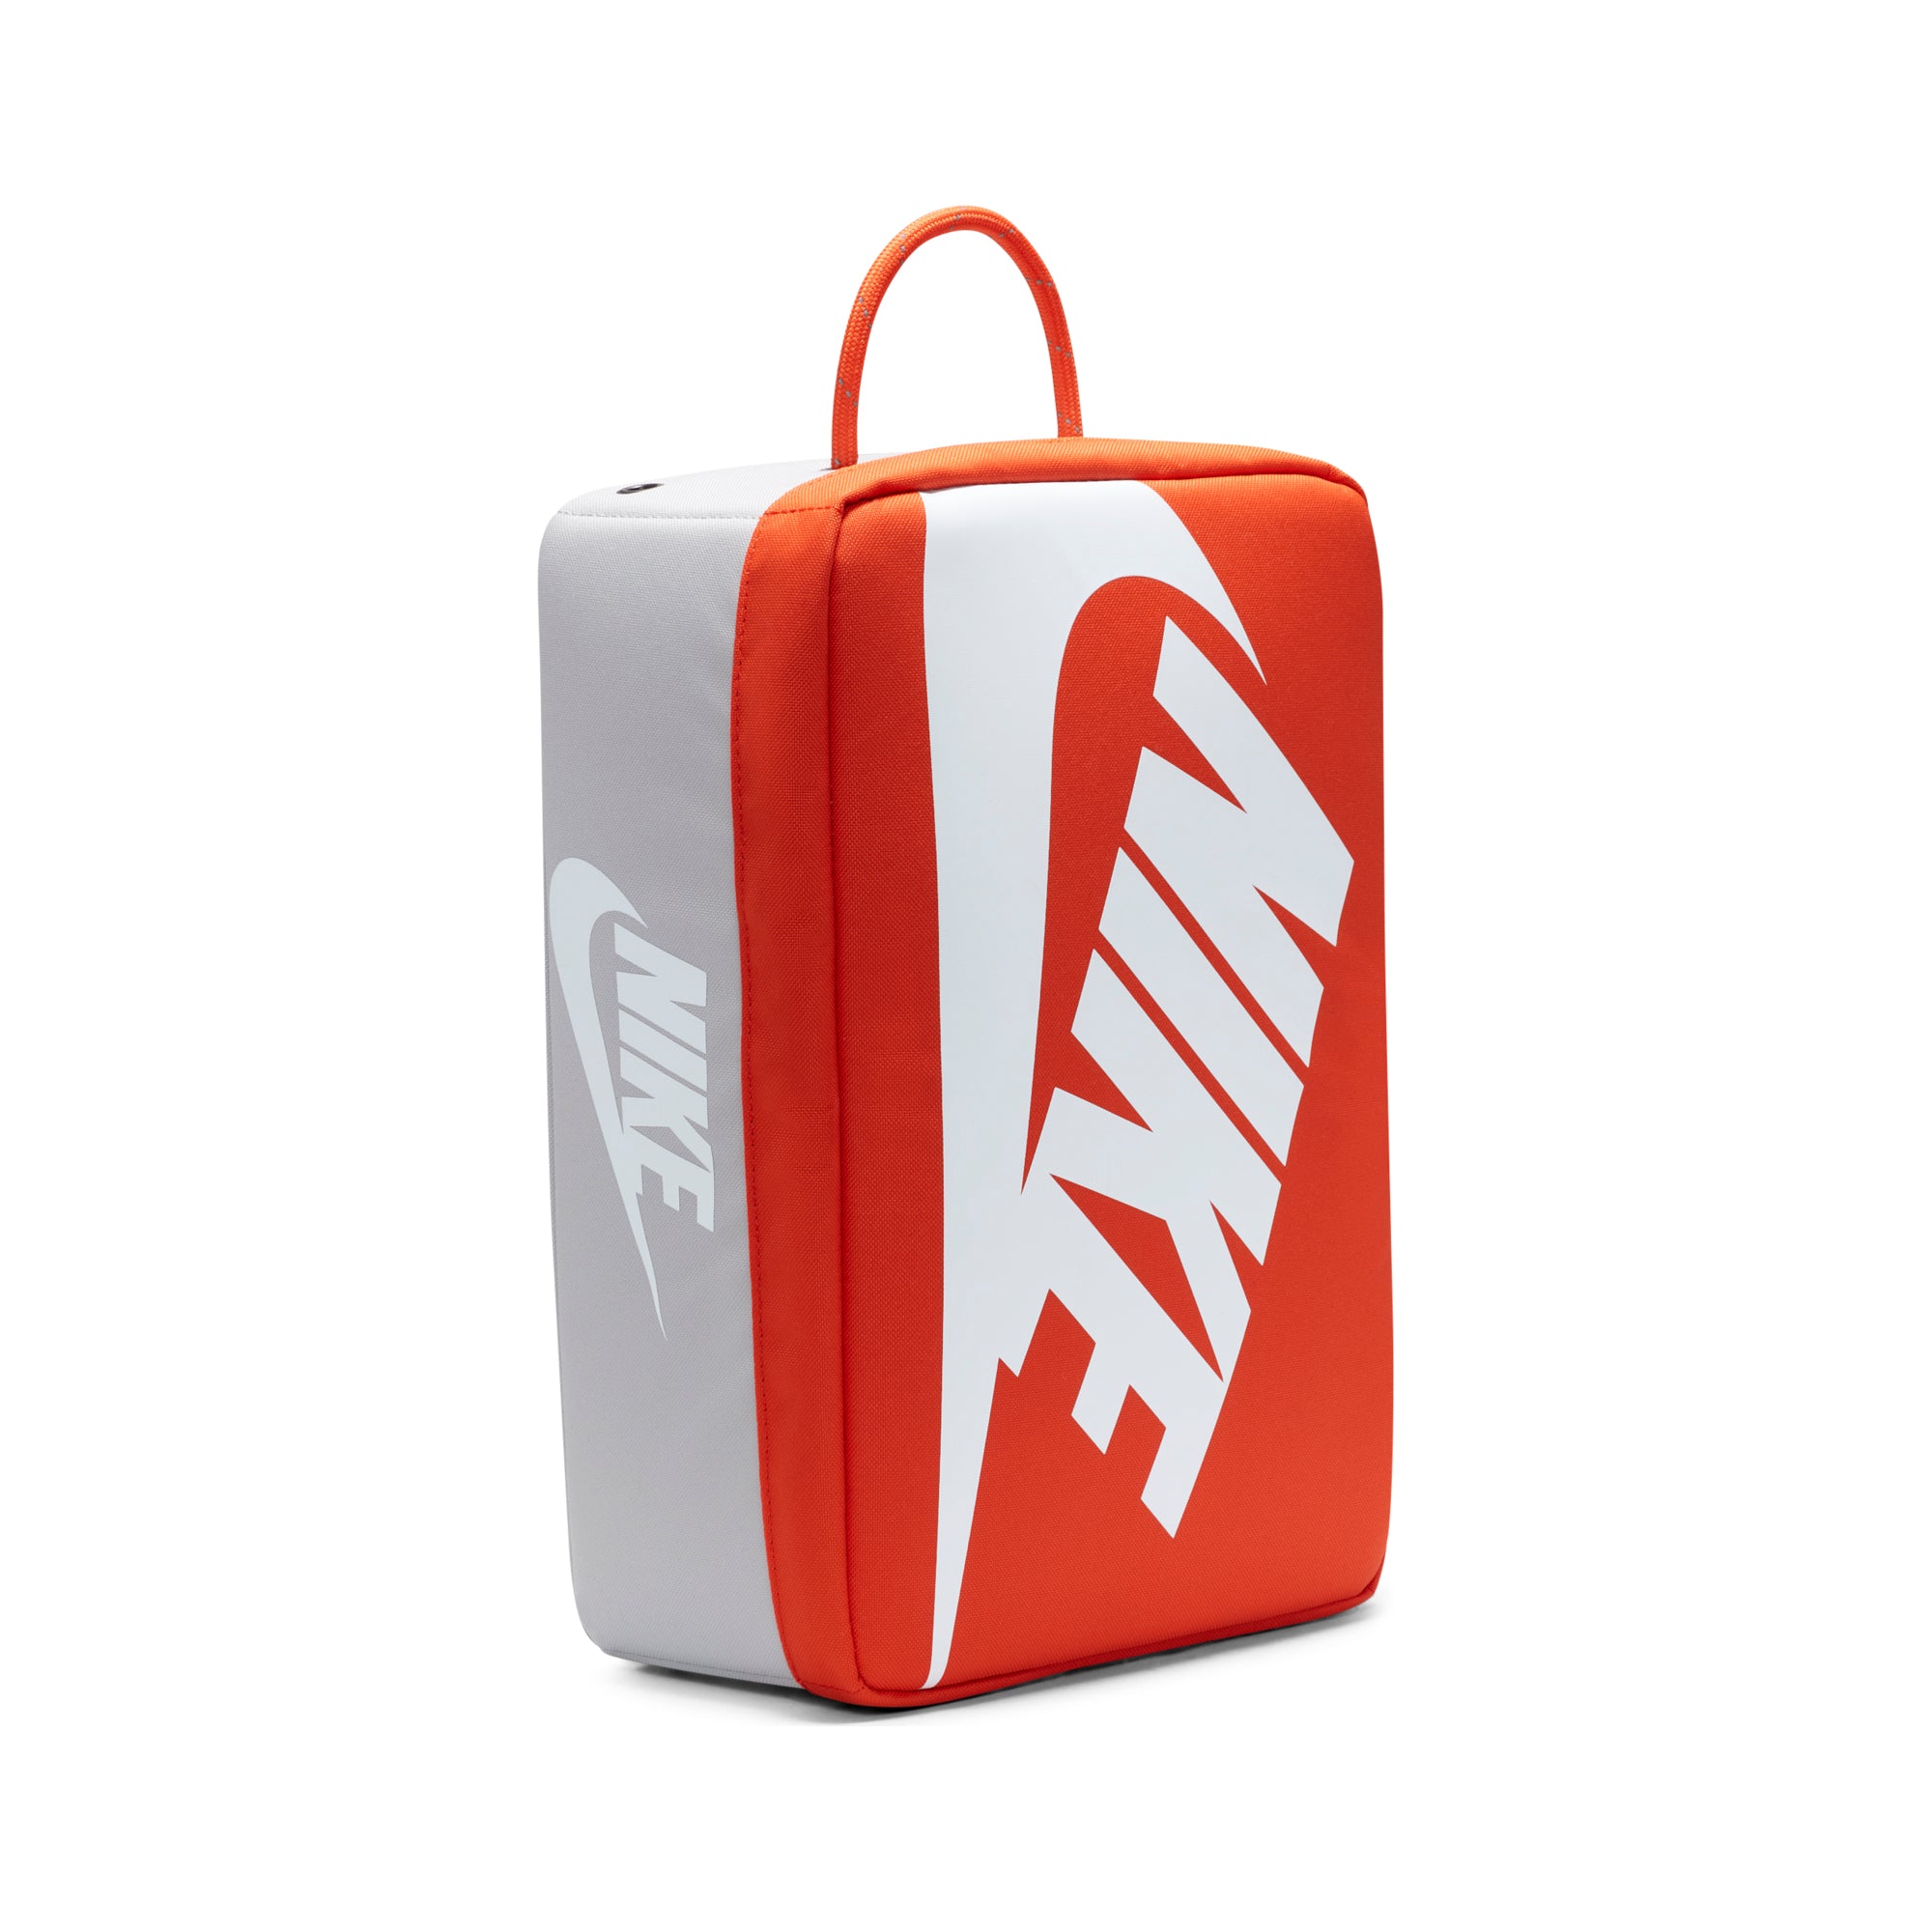 Nike Golf Shoebox Bag